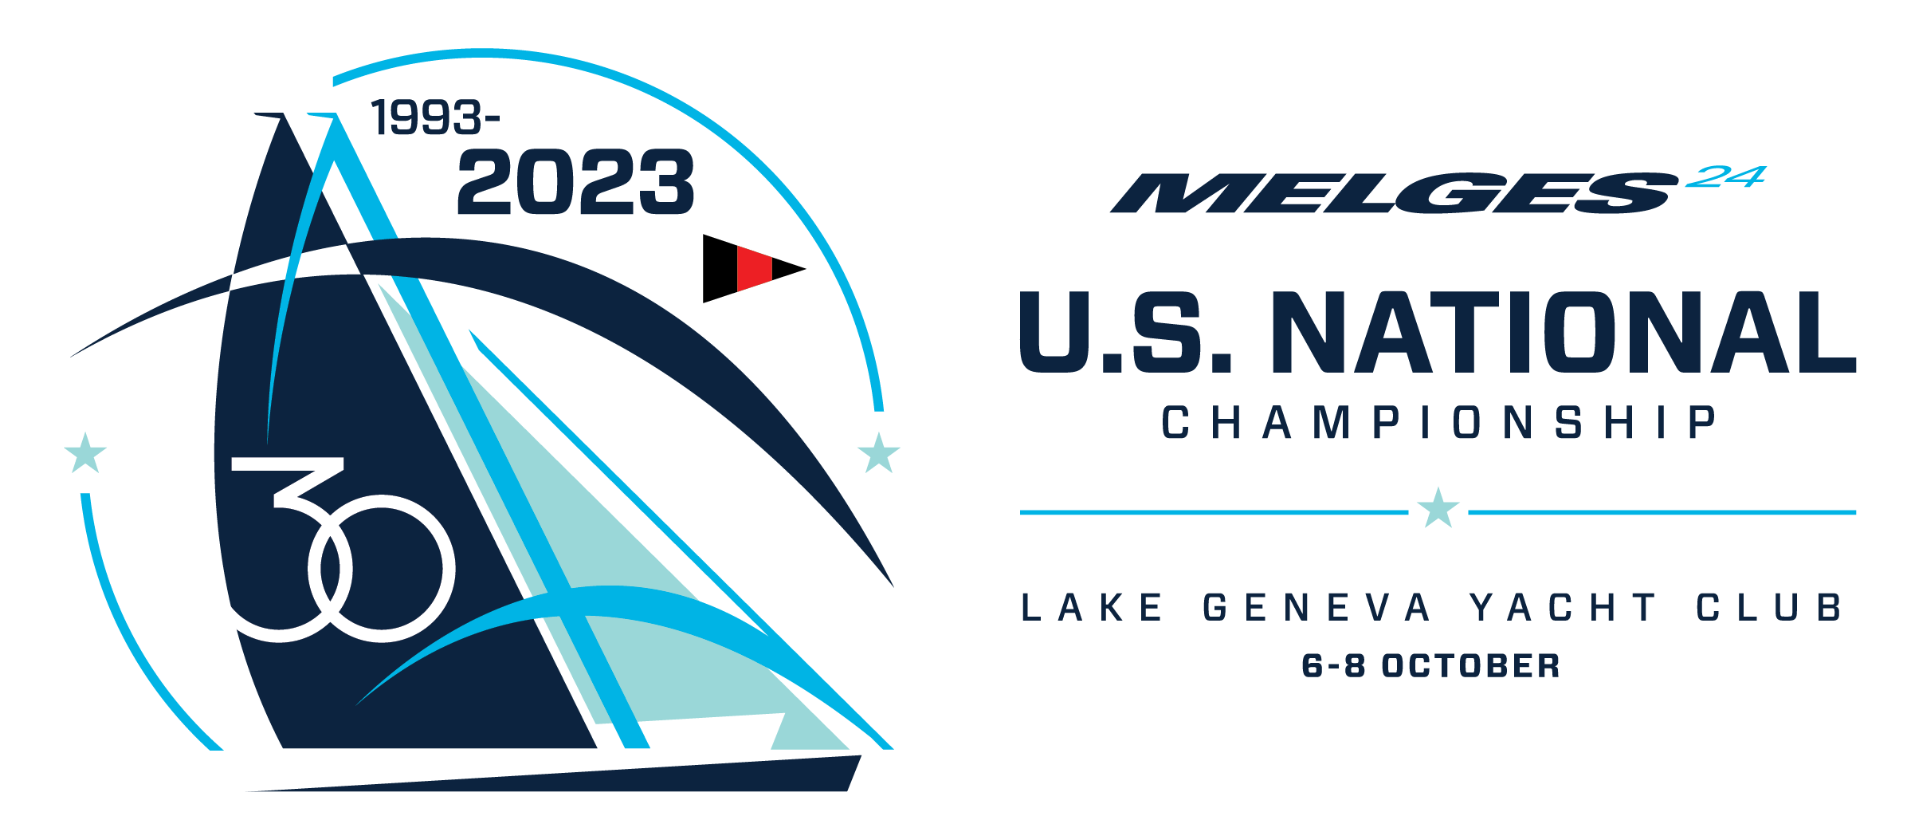 2023 Melges 24 U.S. National Championship - October 6-8